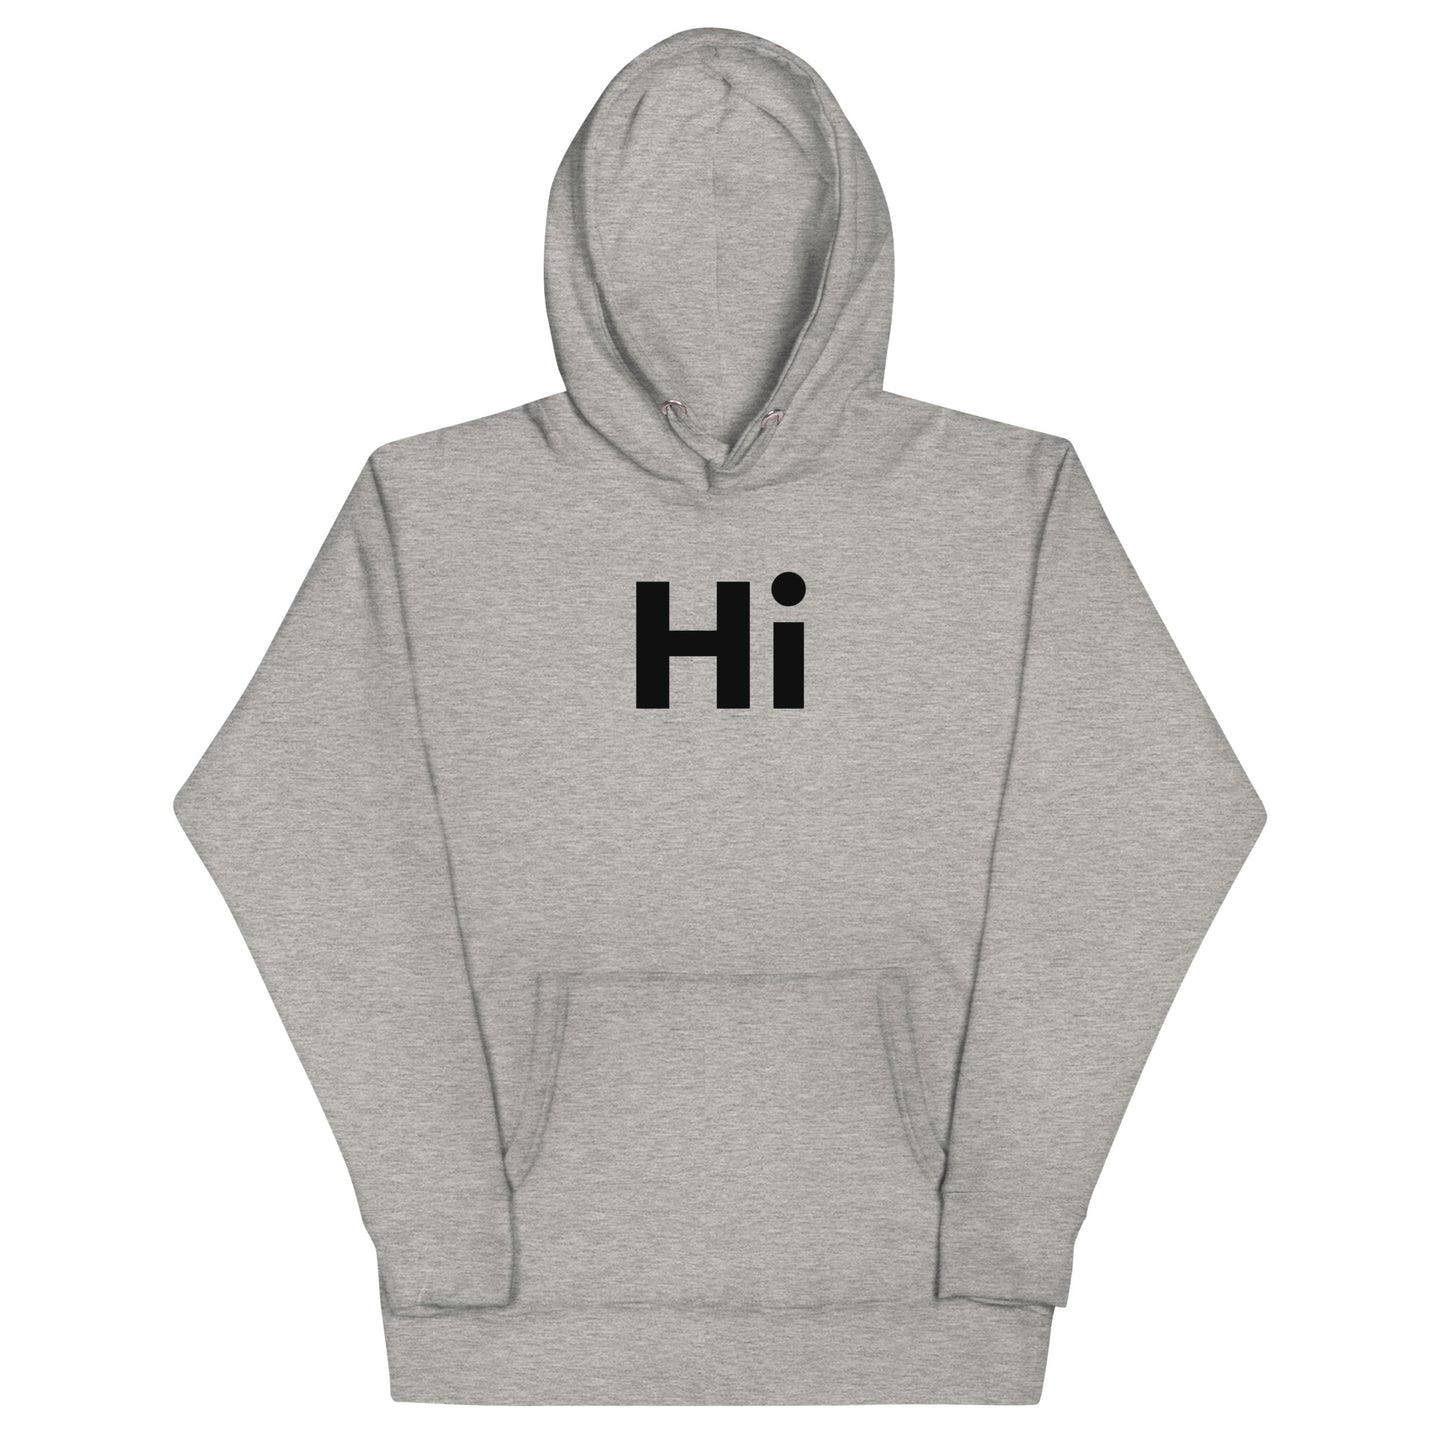 Hi Hoodie in Grey by Happy interactions